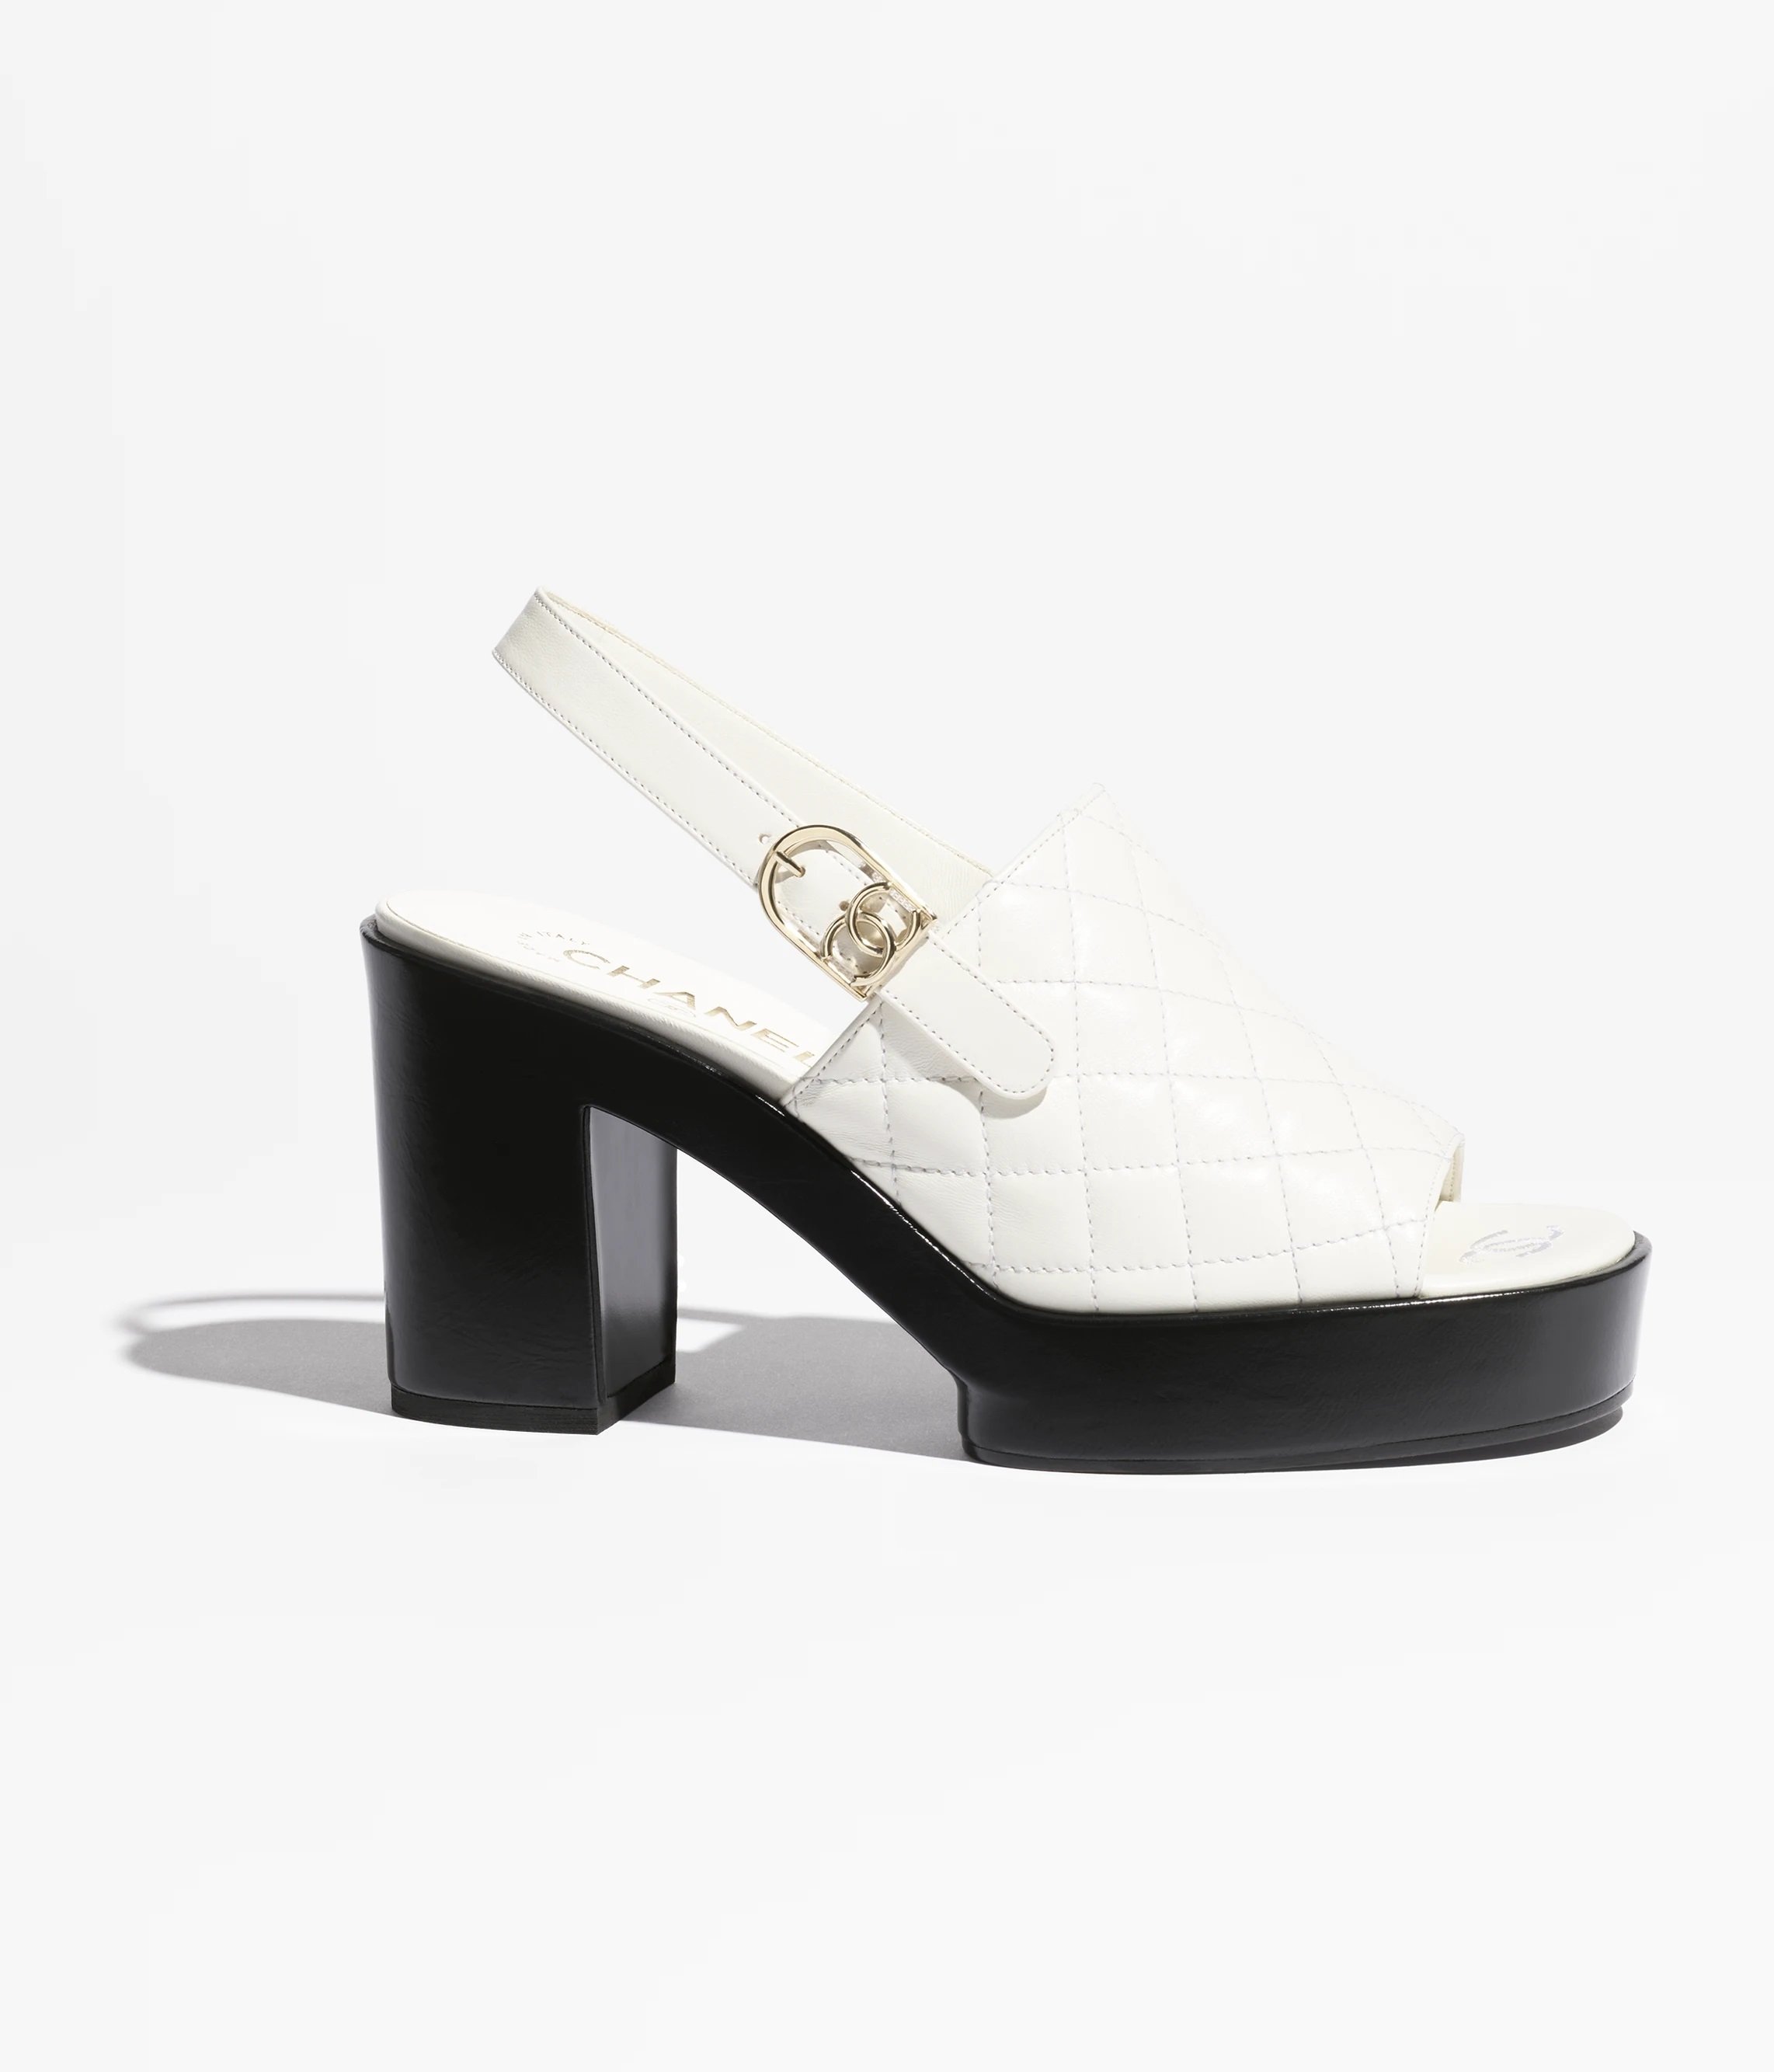 Chanel Quilted Platform Slingback Sandals in White.jpg